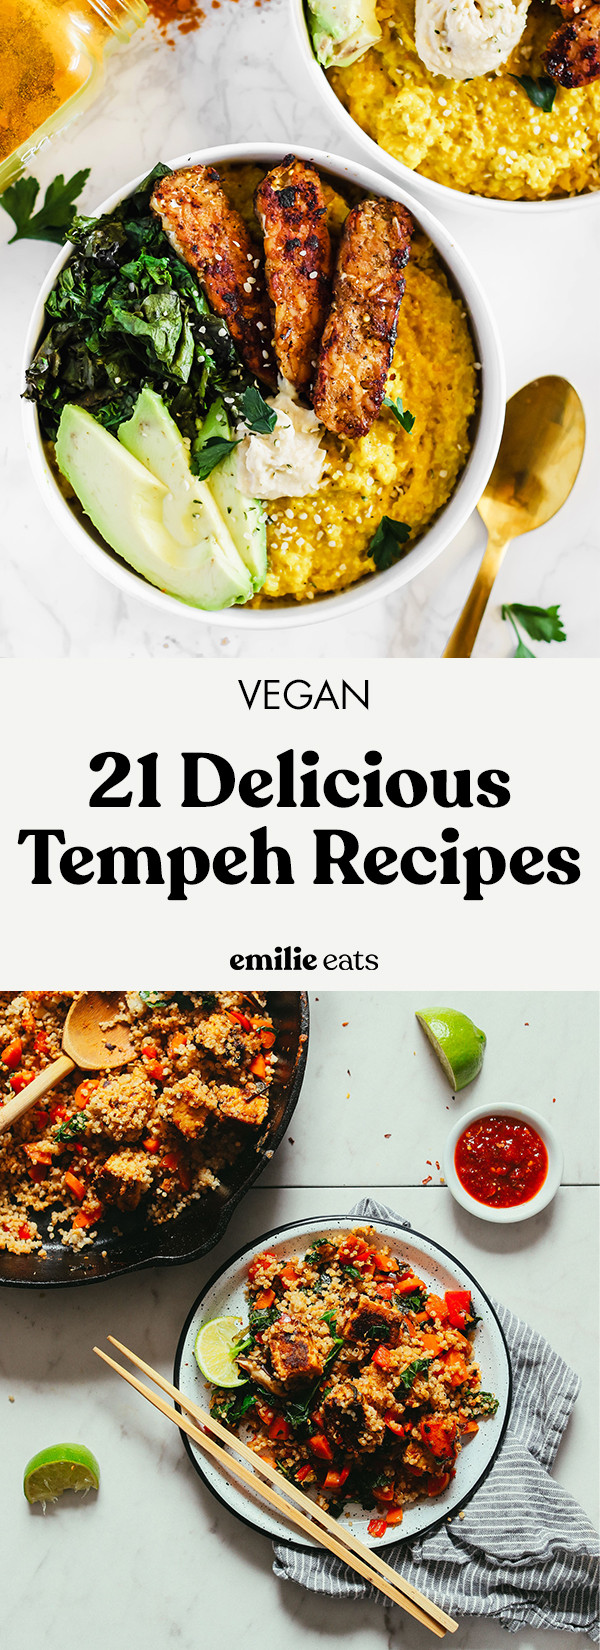 Tempeh Recipes Vegan
 21 Delicious Vegan Tempeh Recipes